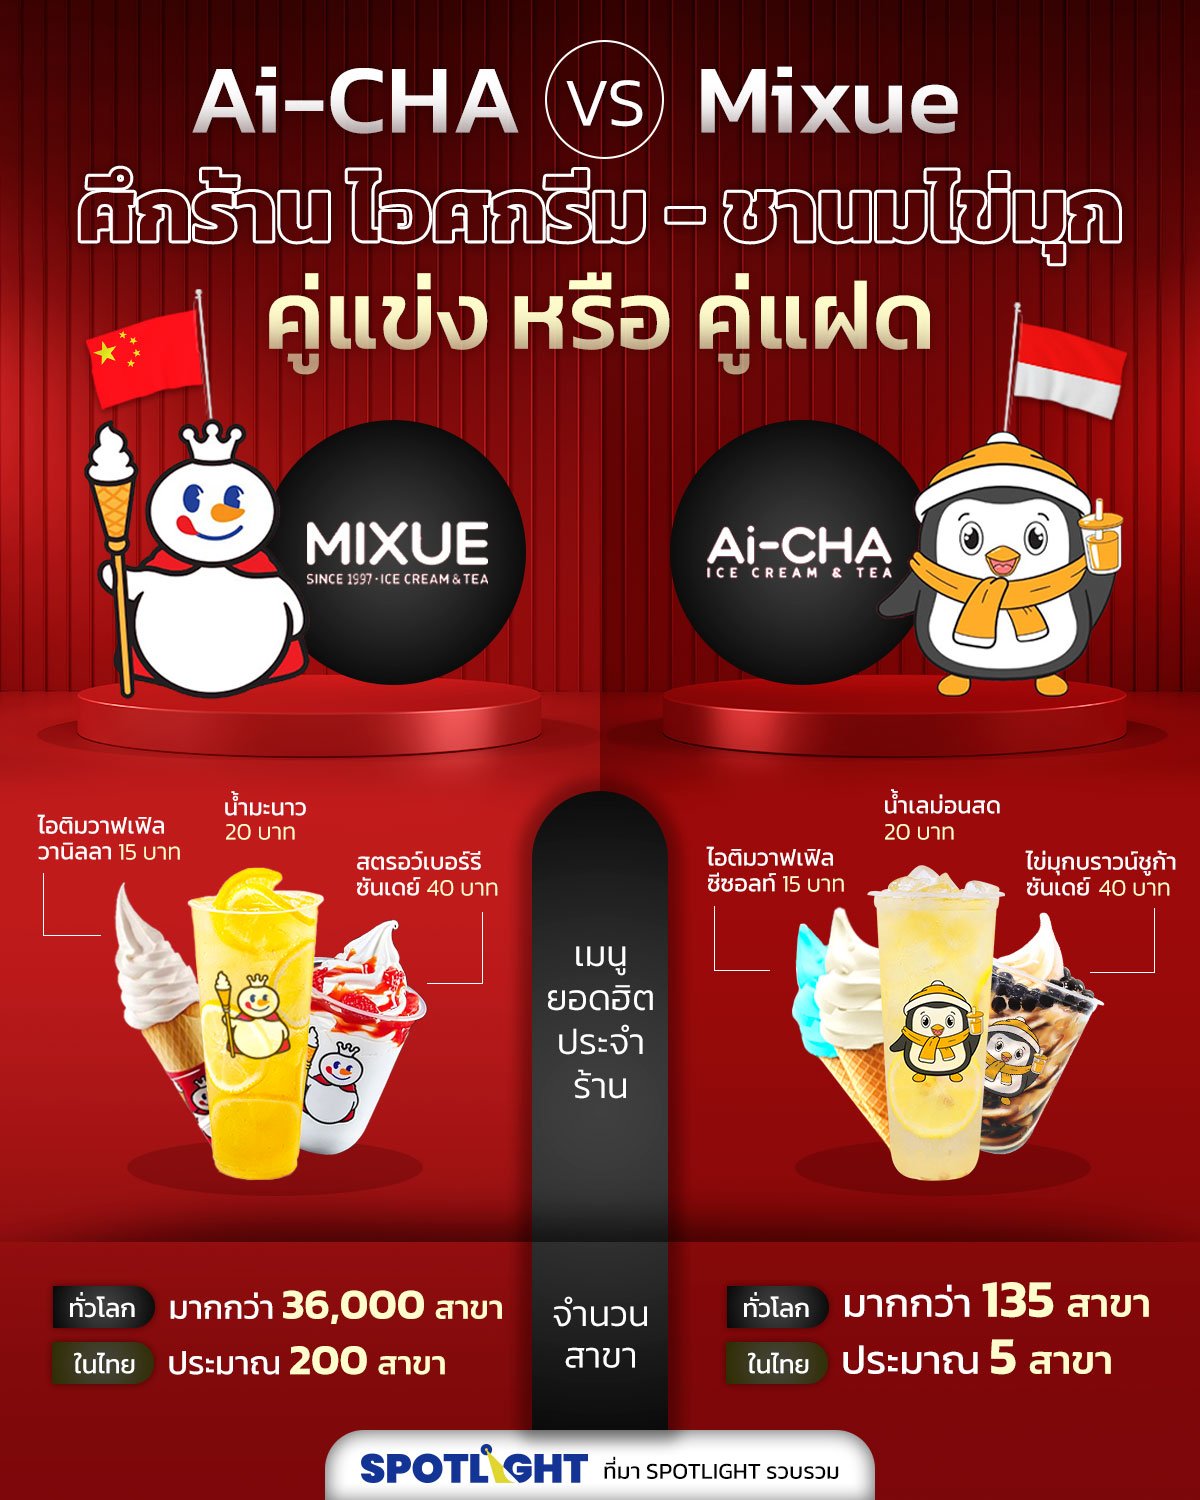 Ai-CHA vs Mixue  ศึกร้าน ไอศกรีม-ชานมไข่มุก ราคาถูก โดนใจคนไทย